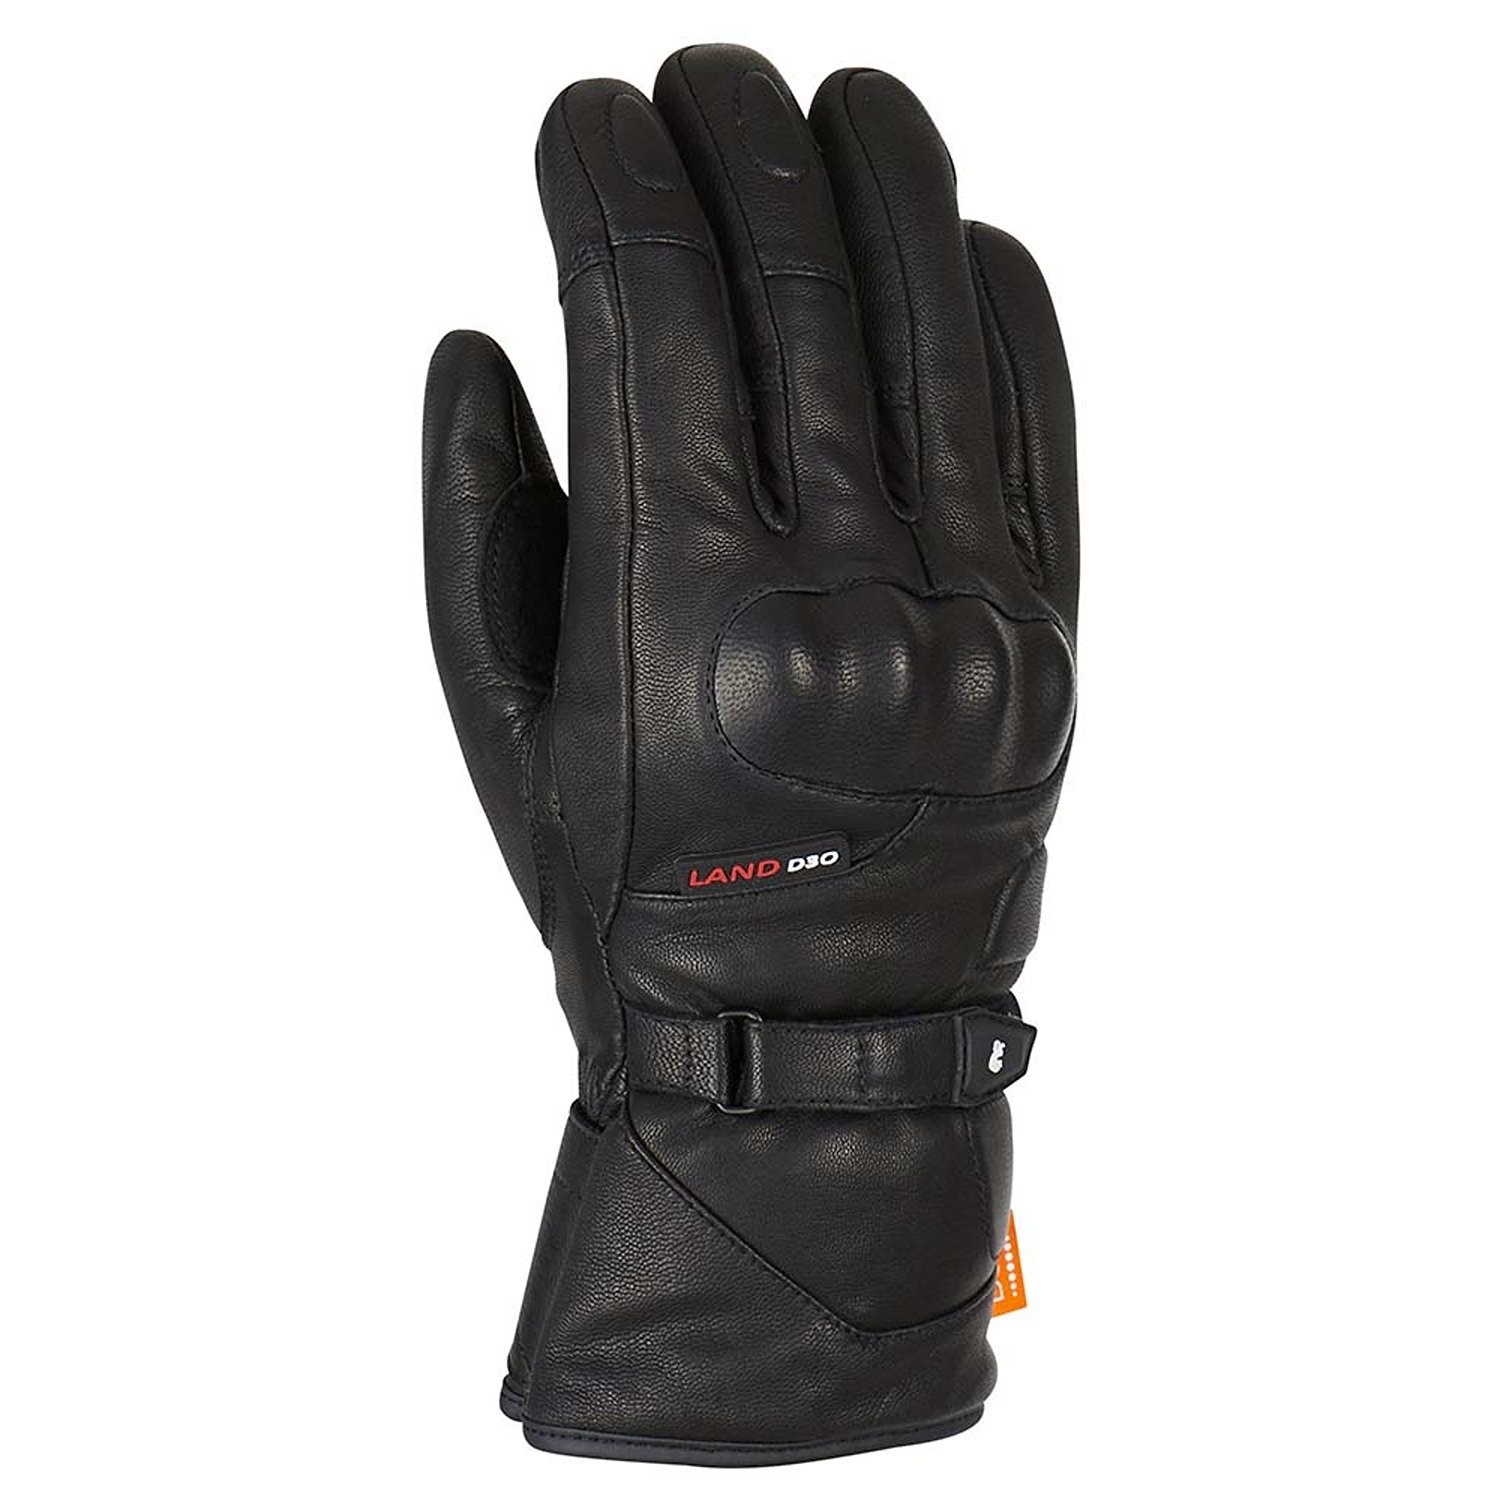 Image of Furygan Land DK D30 Gloves Black Talla 3XL